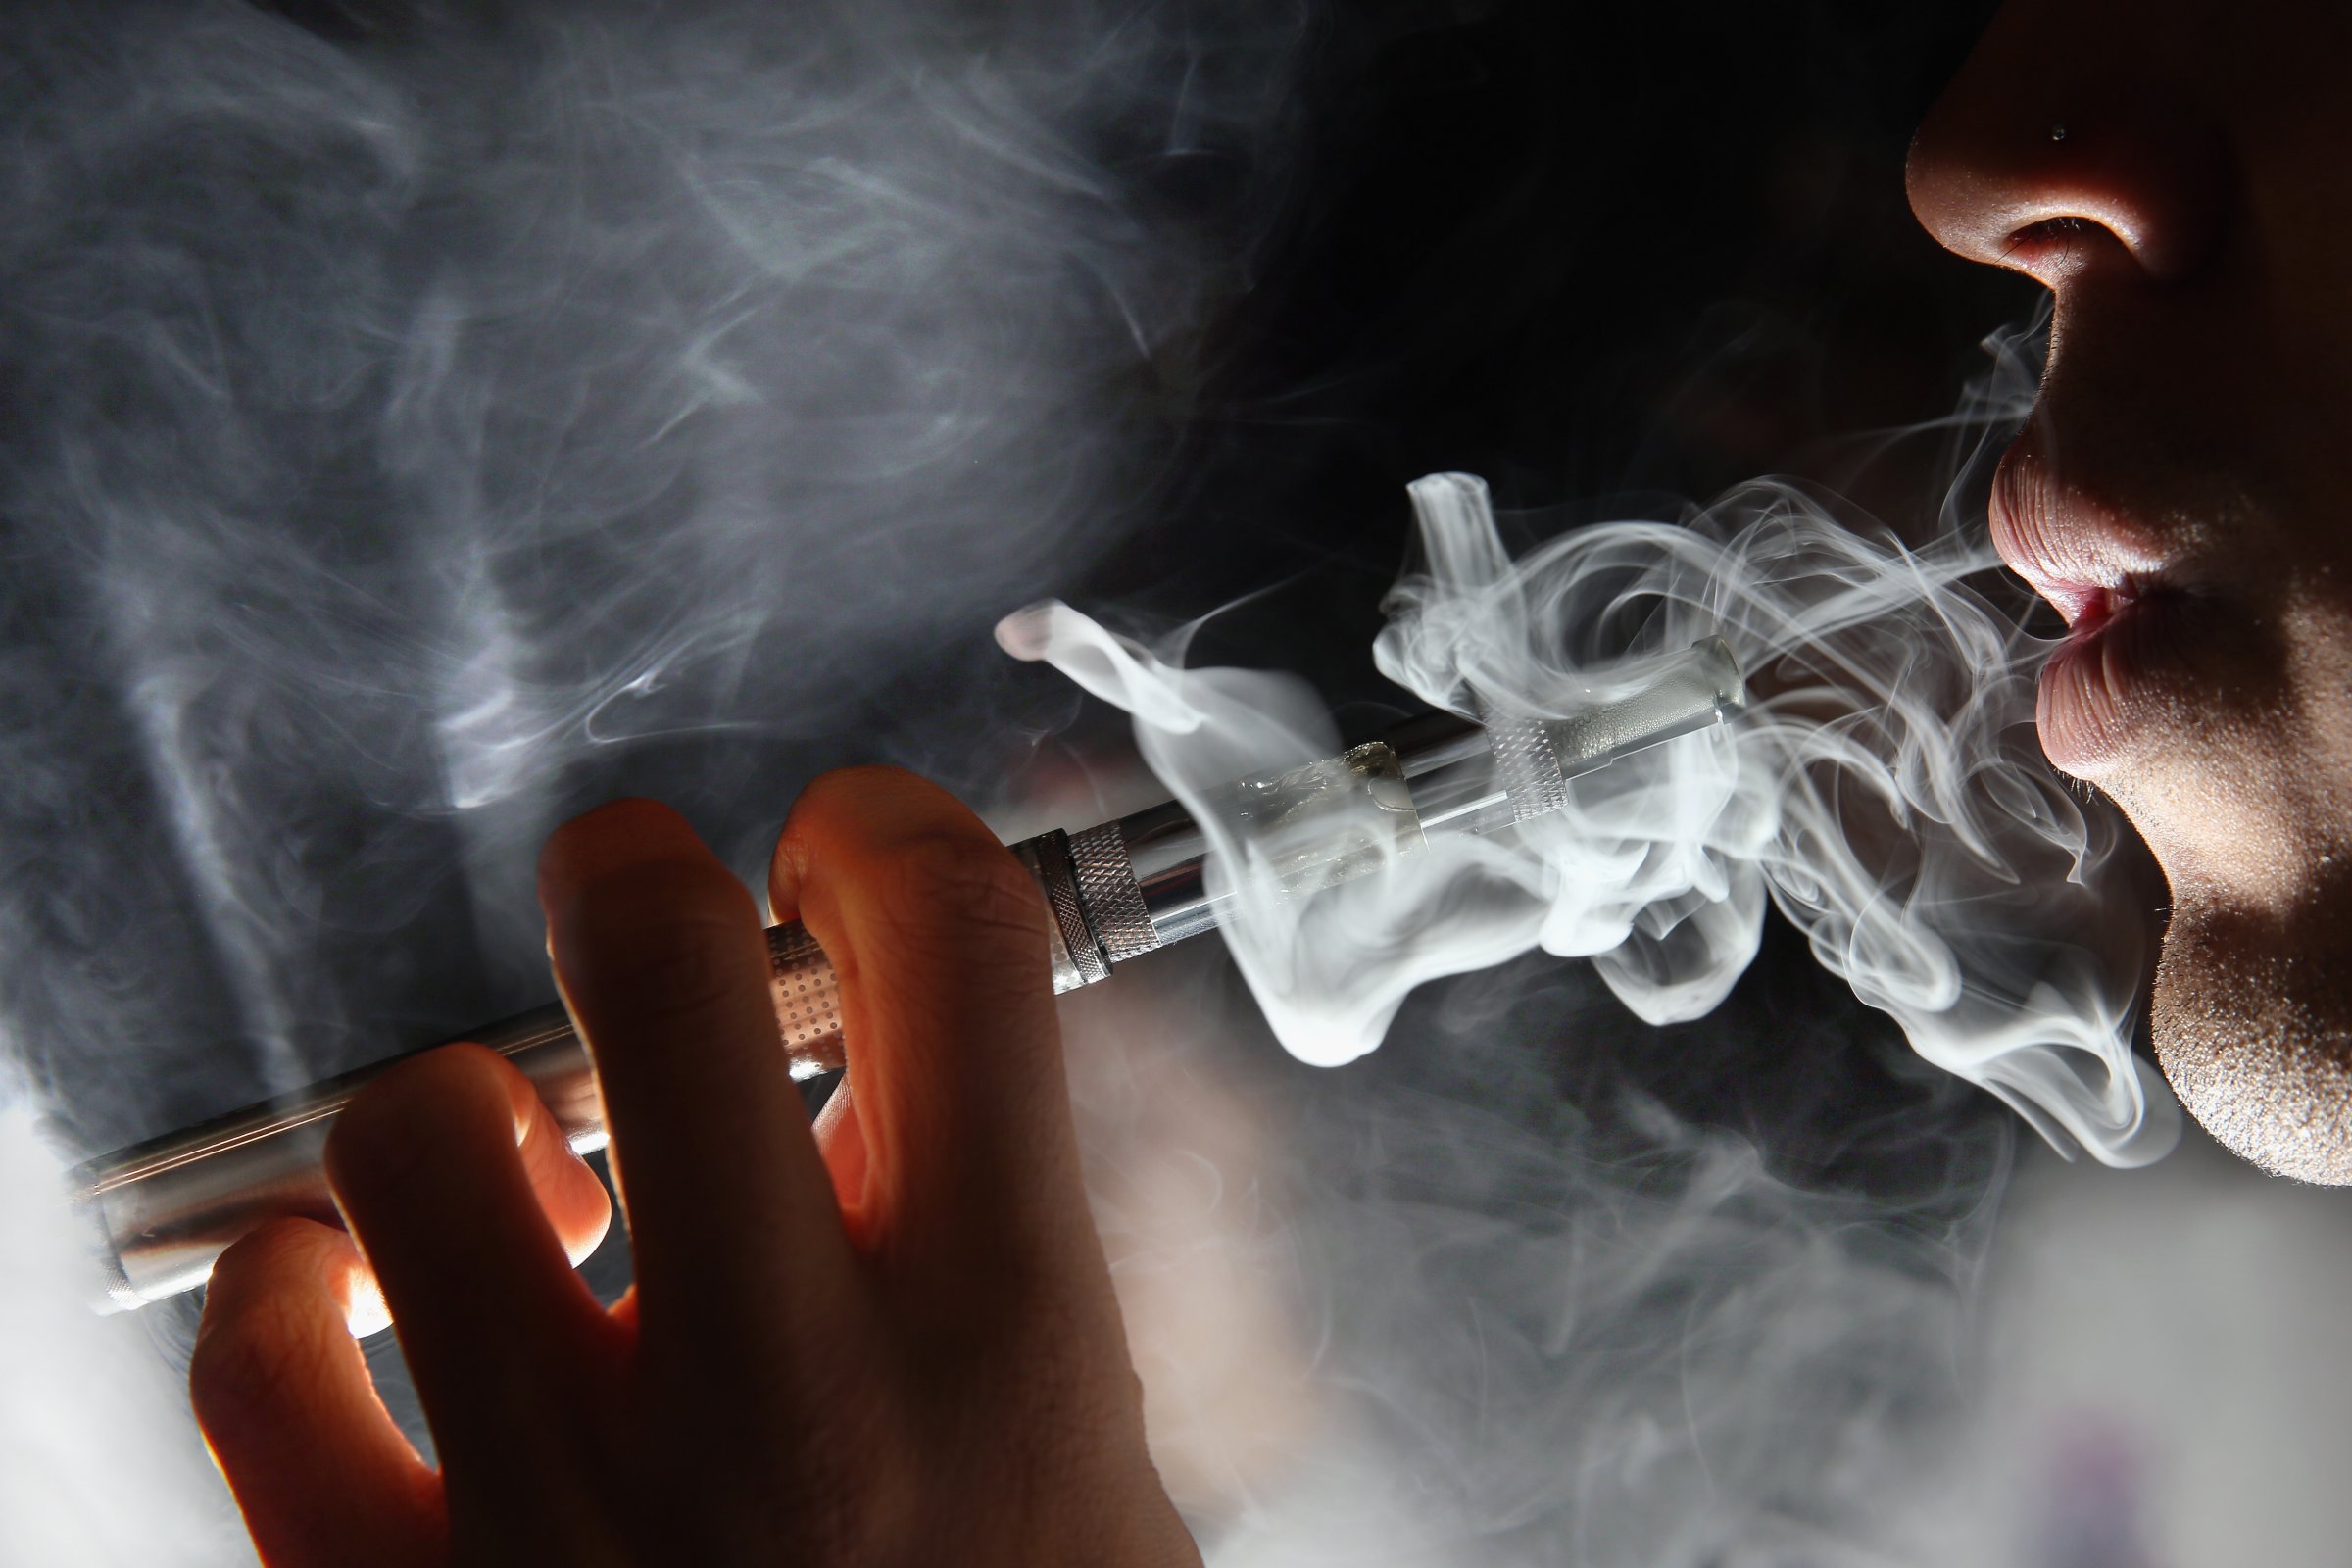 A man smokes an E-Cigarette on Aug. 27, 2014 in London.